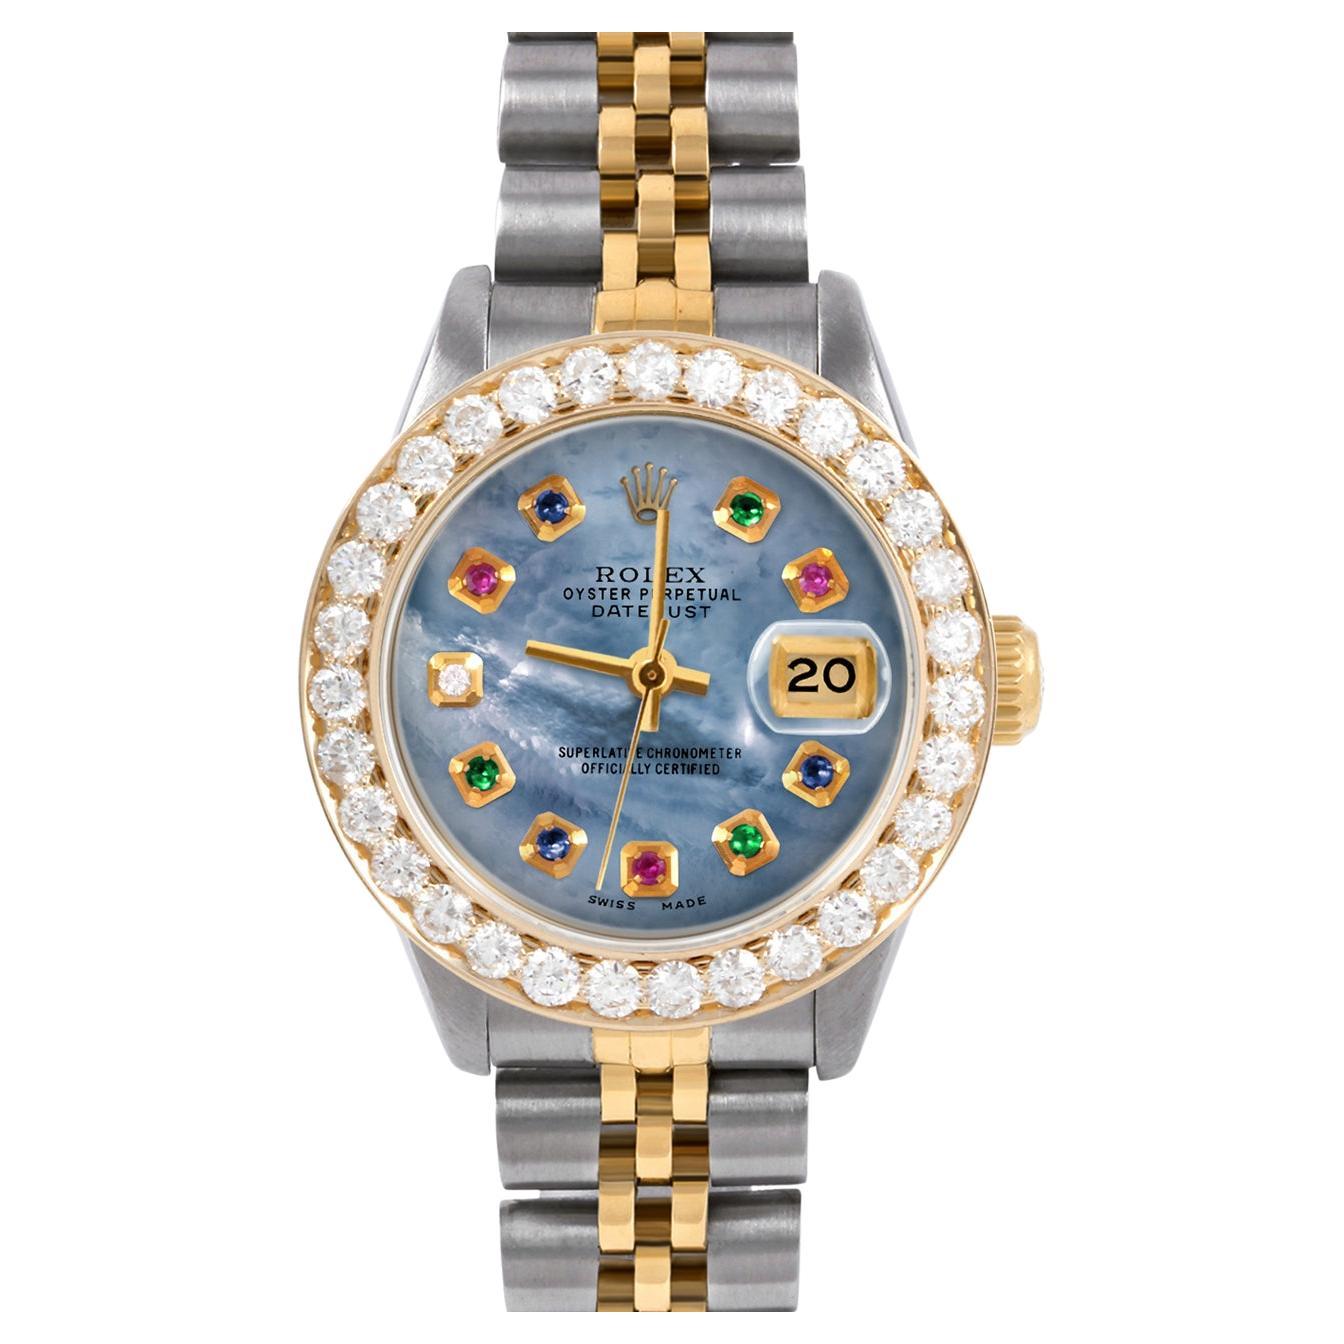 Rolex Lady TT Datejust Blue MOP Rainbow Diamond Dial 2ct Diamond Bezel Watch